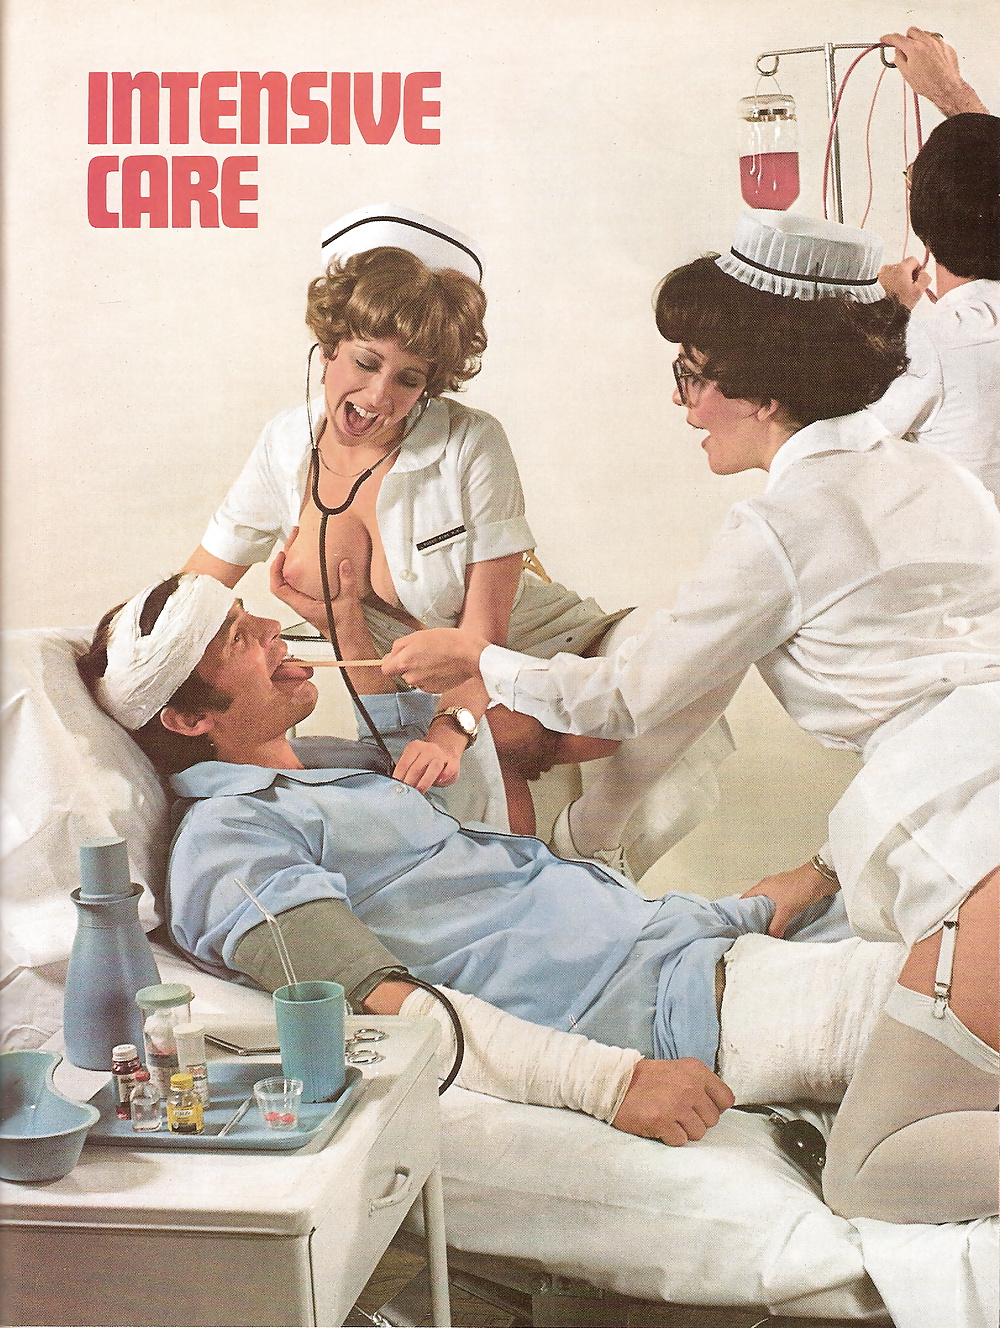 Classic Hustler Sept 1976 - Intensive Care #27877282